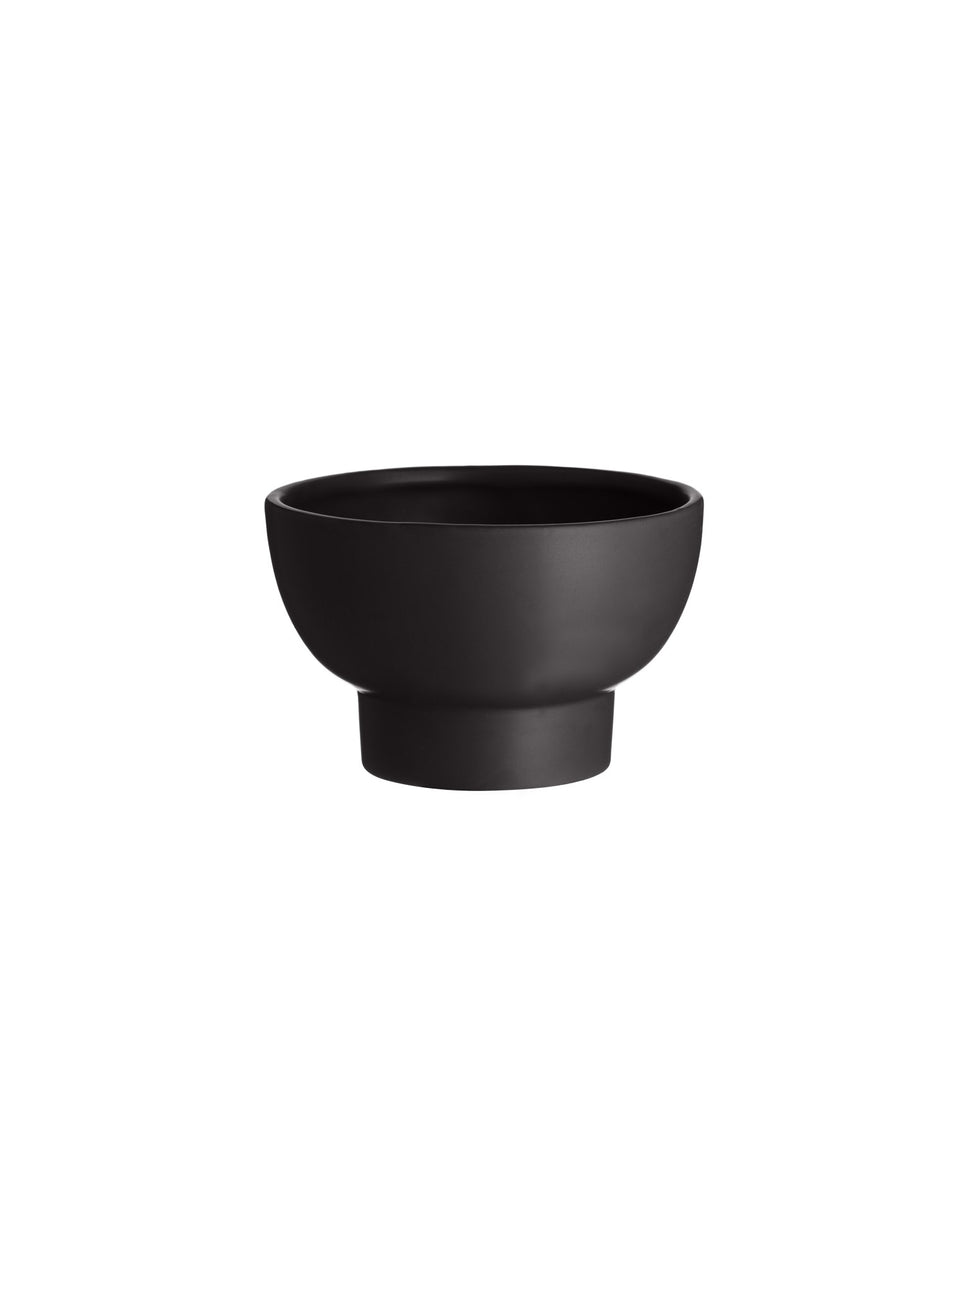 Ceramic Black Pedestal Bowl - Small